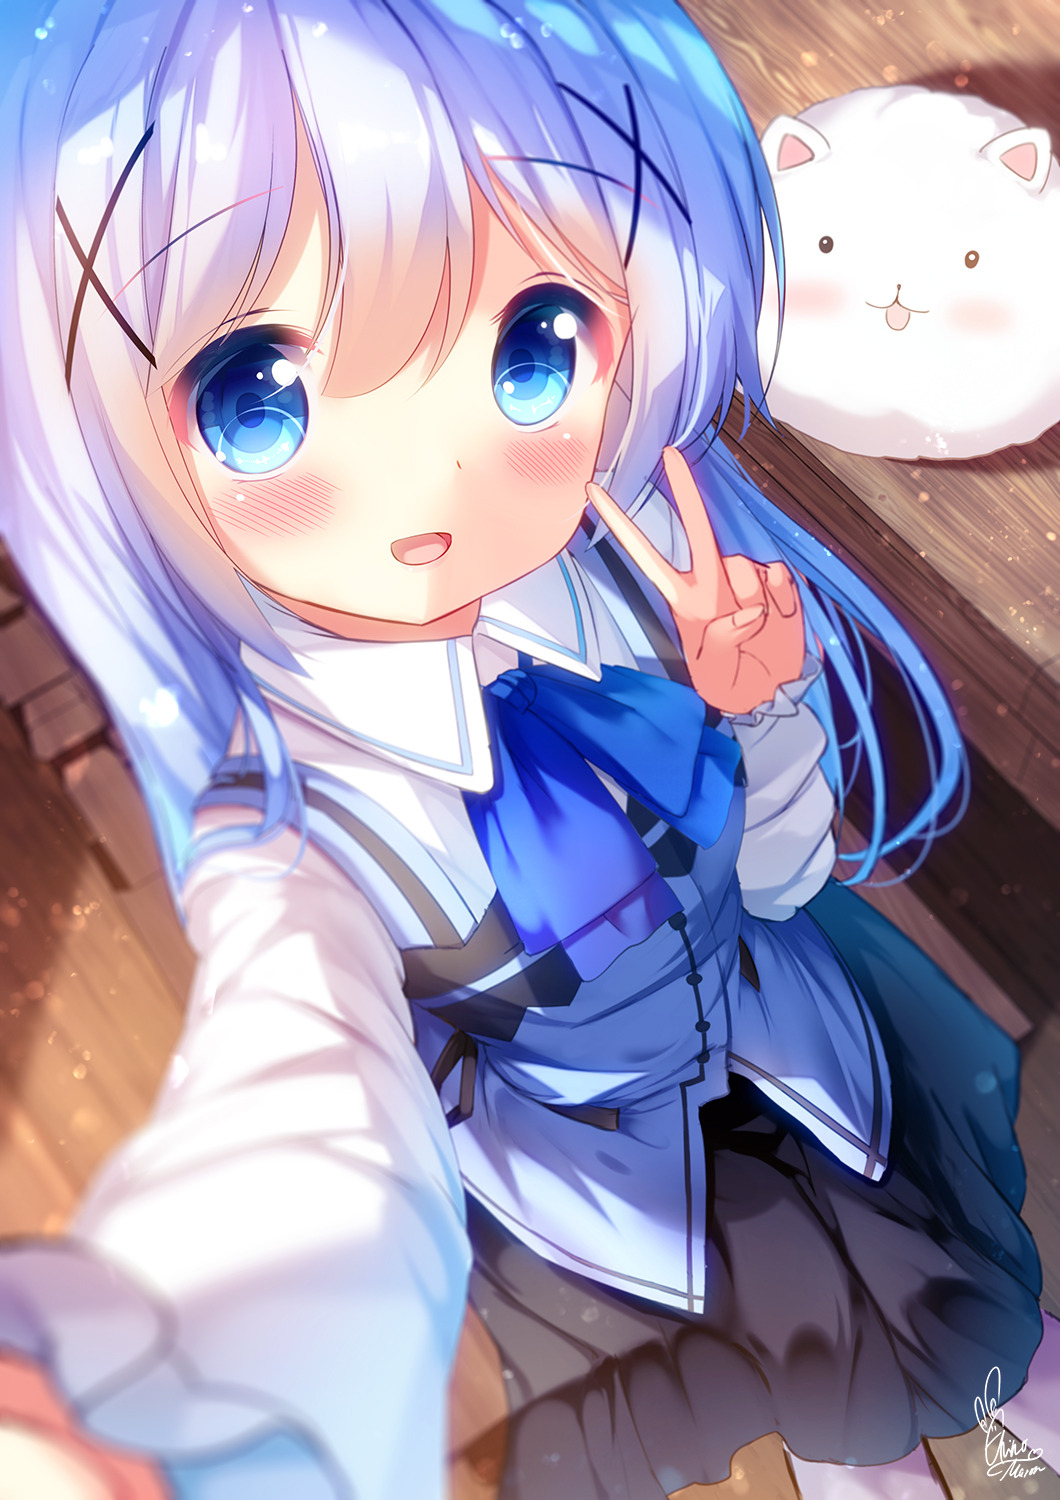 Planet Anime — Rabbit selfie. [Gochuumon wa Usagi Desu ka?]